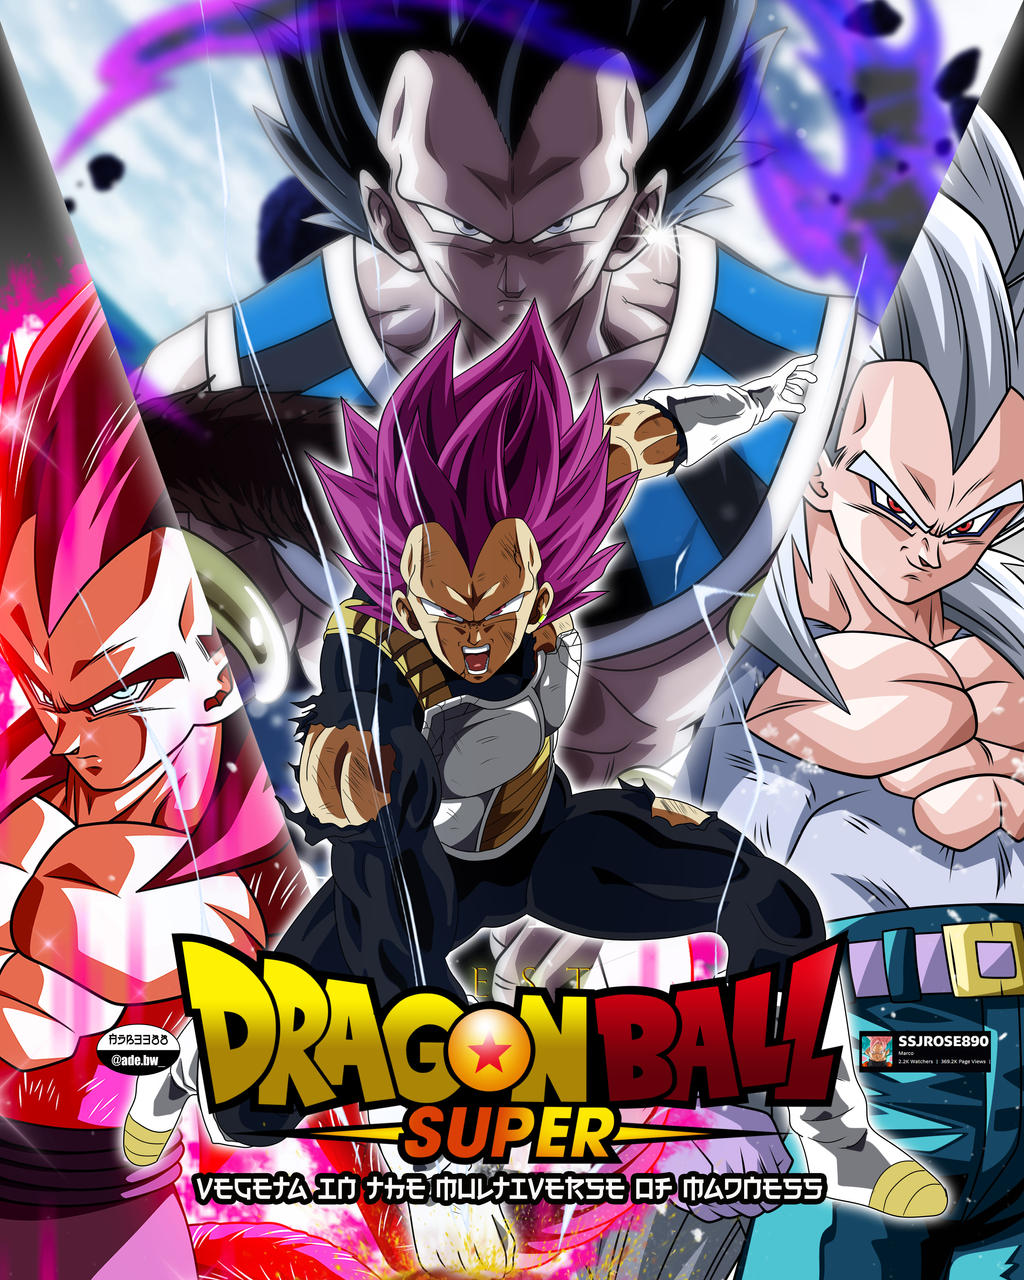 Vegeta Final Flash (Poster) by adb3388 on DeviantArt  Anime dragon ball  super, Dragon ball art, Dragon ball artwork